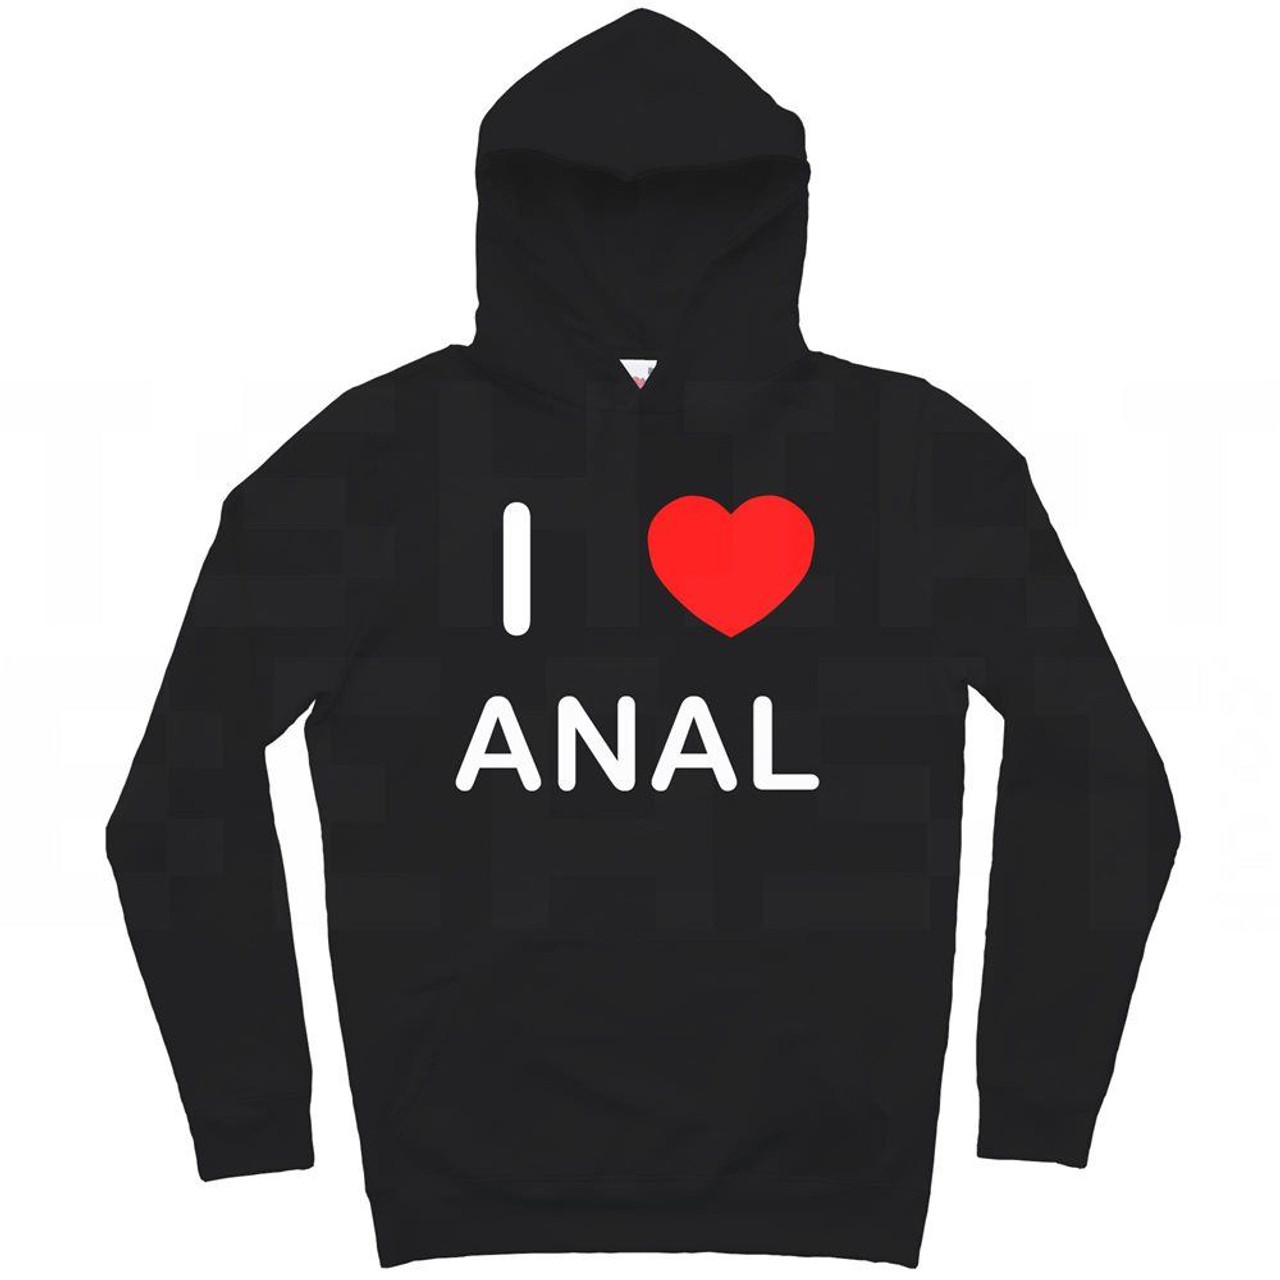 I Love Anal - Hoodie | BadgeBeast.co.uk